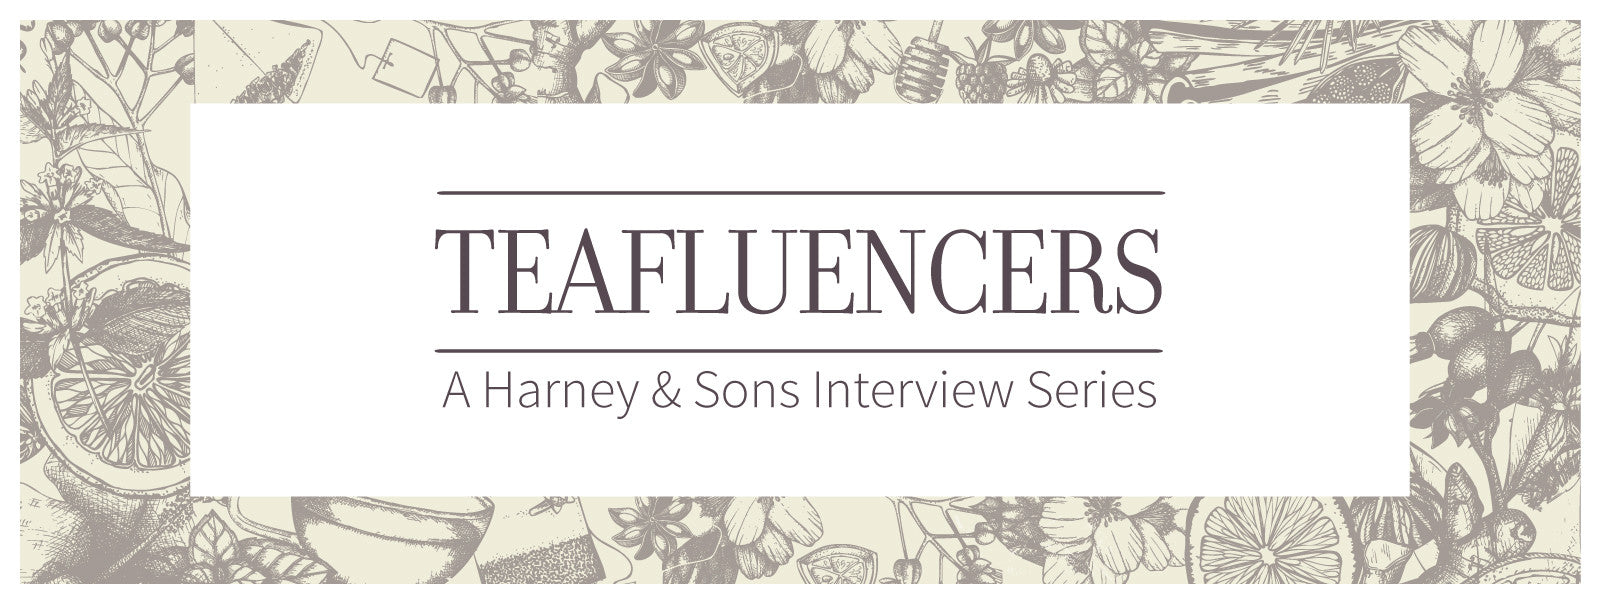 Harney & Sons Teafluencer Series | Abby Copleston